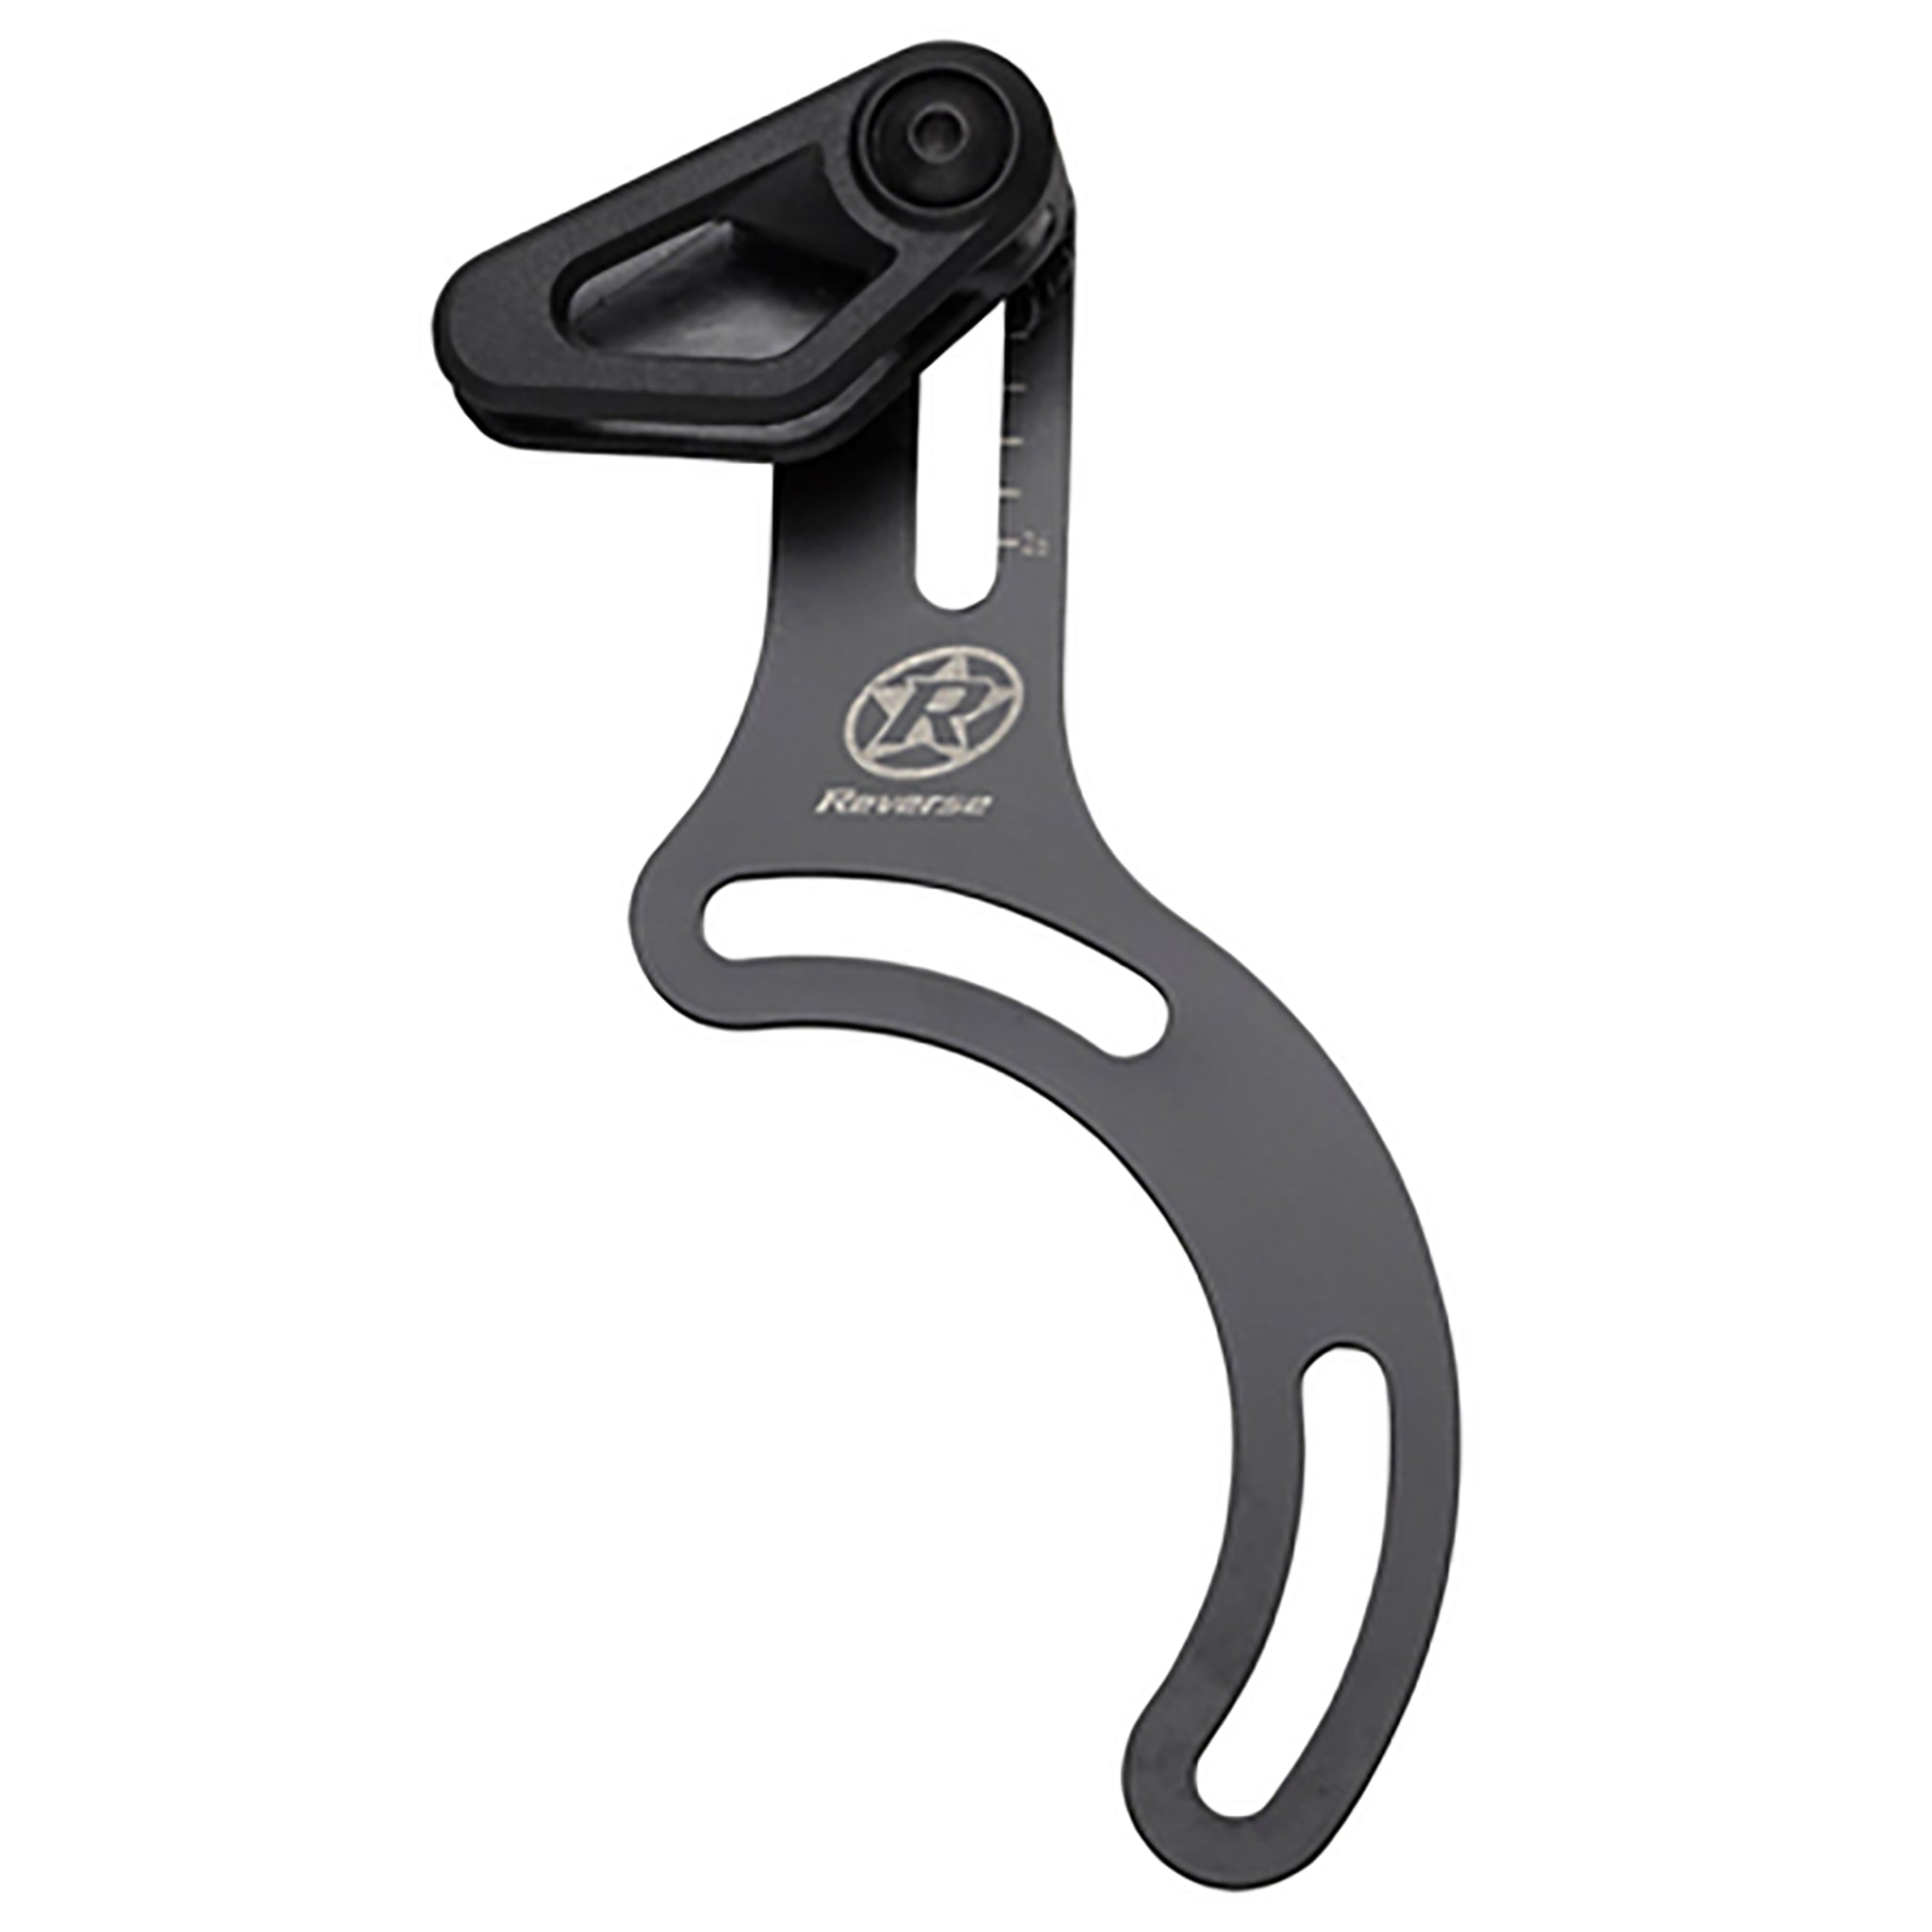 Reverse Flip Guide Chain Guide Bosch G4 Black